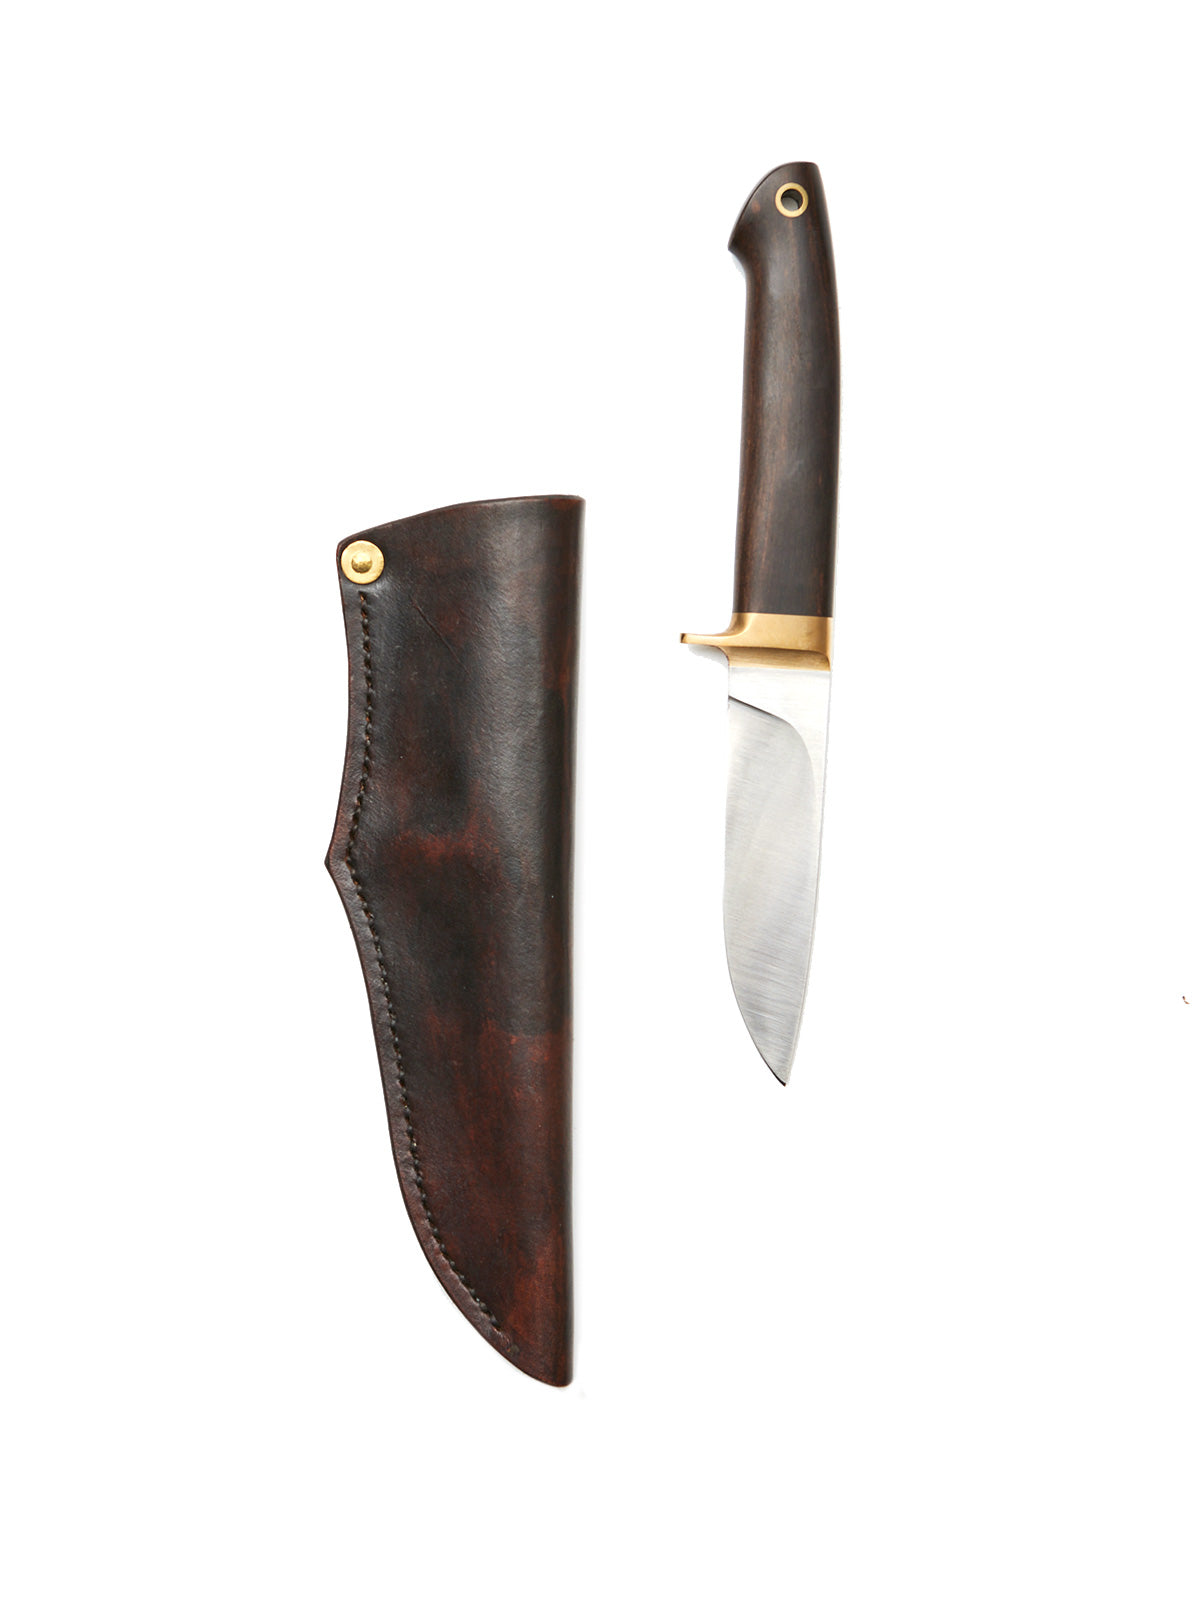 Sam Harrison Handmade Hunting Knife with Brown Leather Sheath